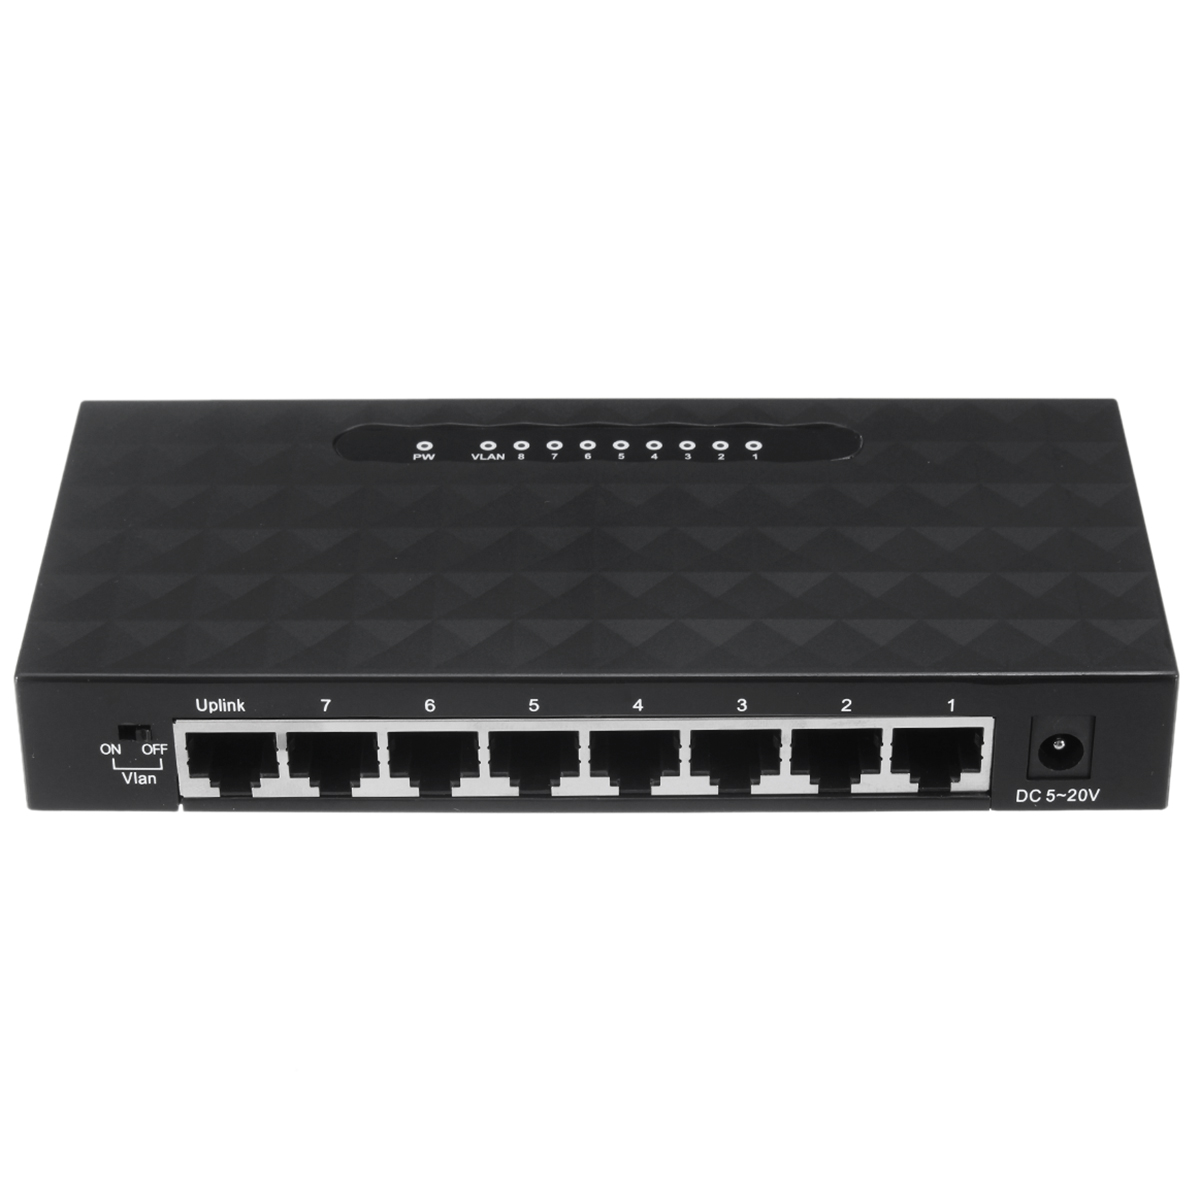 

8-Port RJ45 10/100/1000Mbps Gigabit Ethernet Network Switch Lan Hub Adapter for Routers Modems